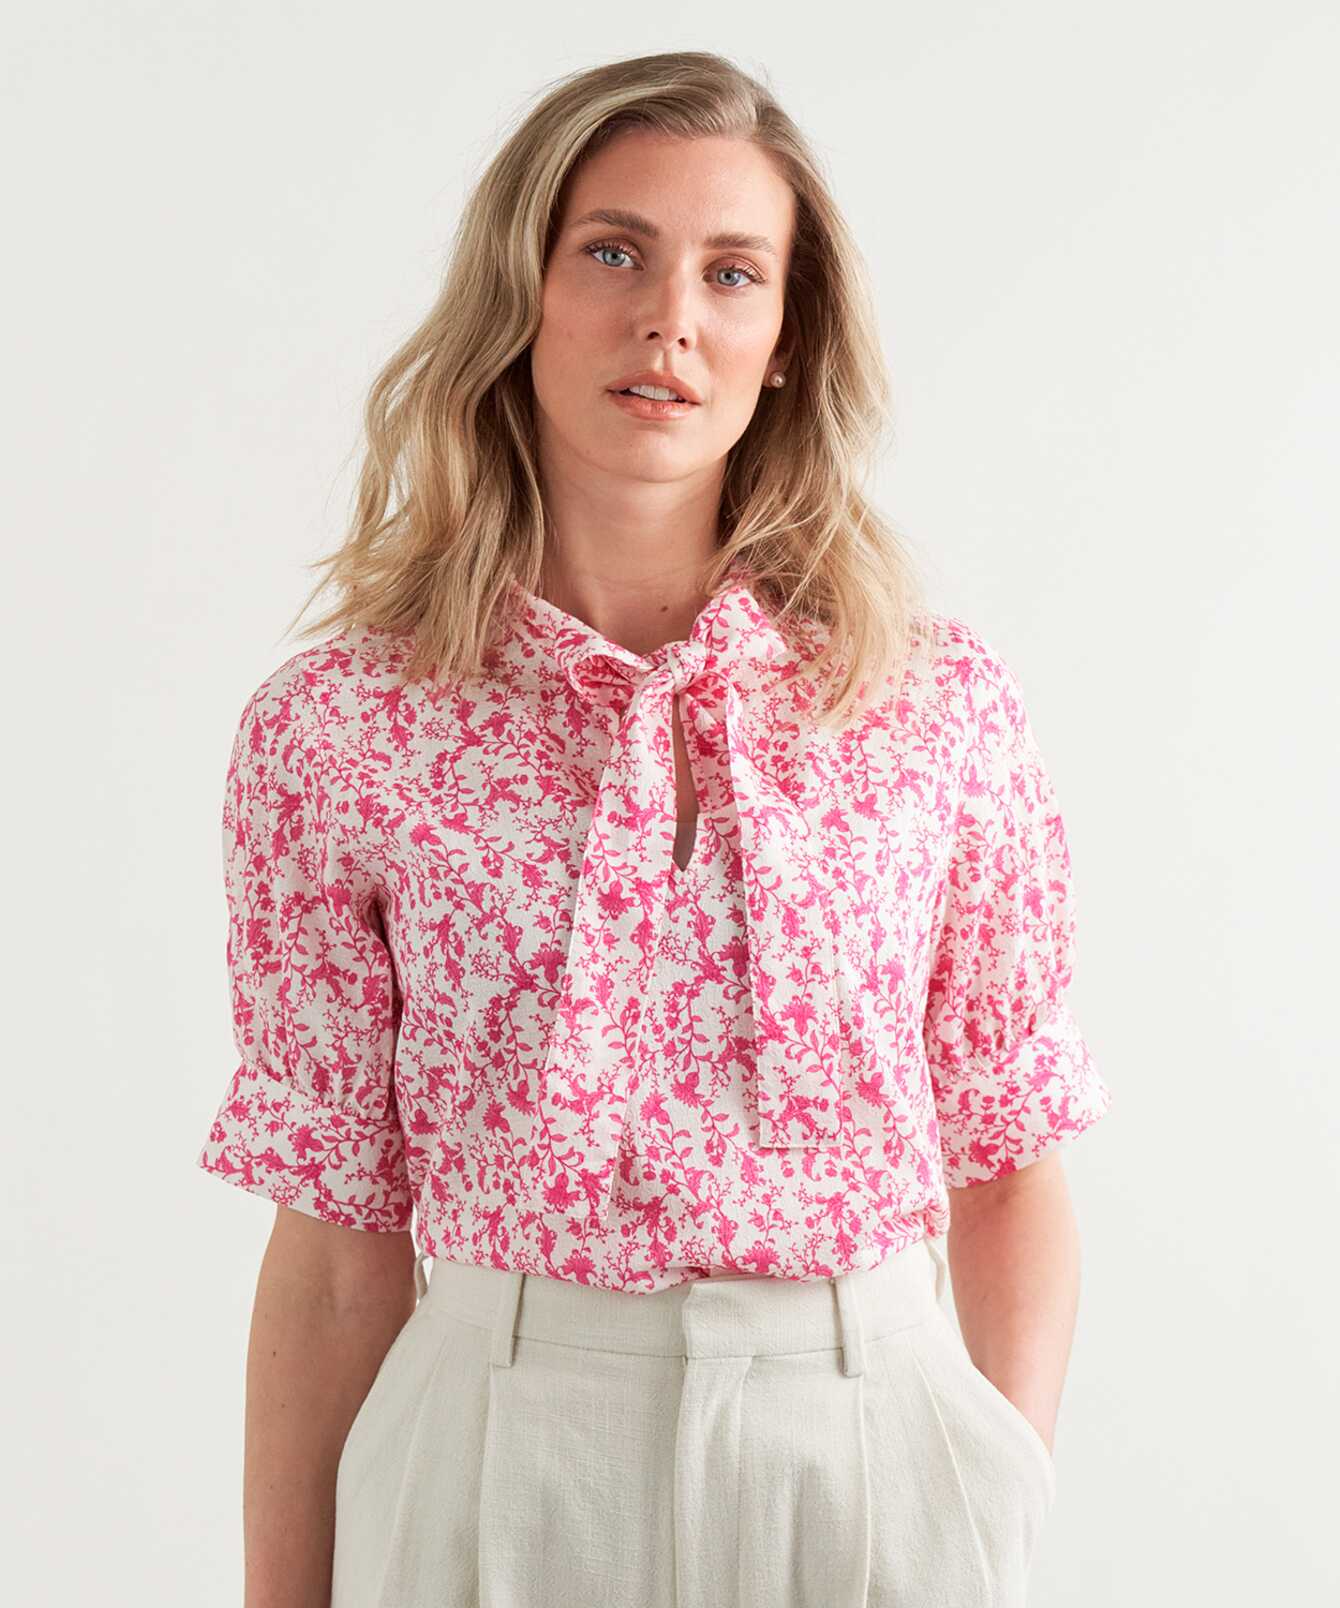 Shirt Sanna Pink Floral Jacquard Blouse The Shirt Factory